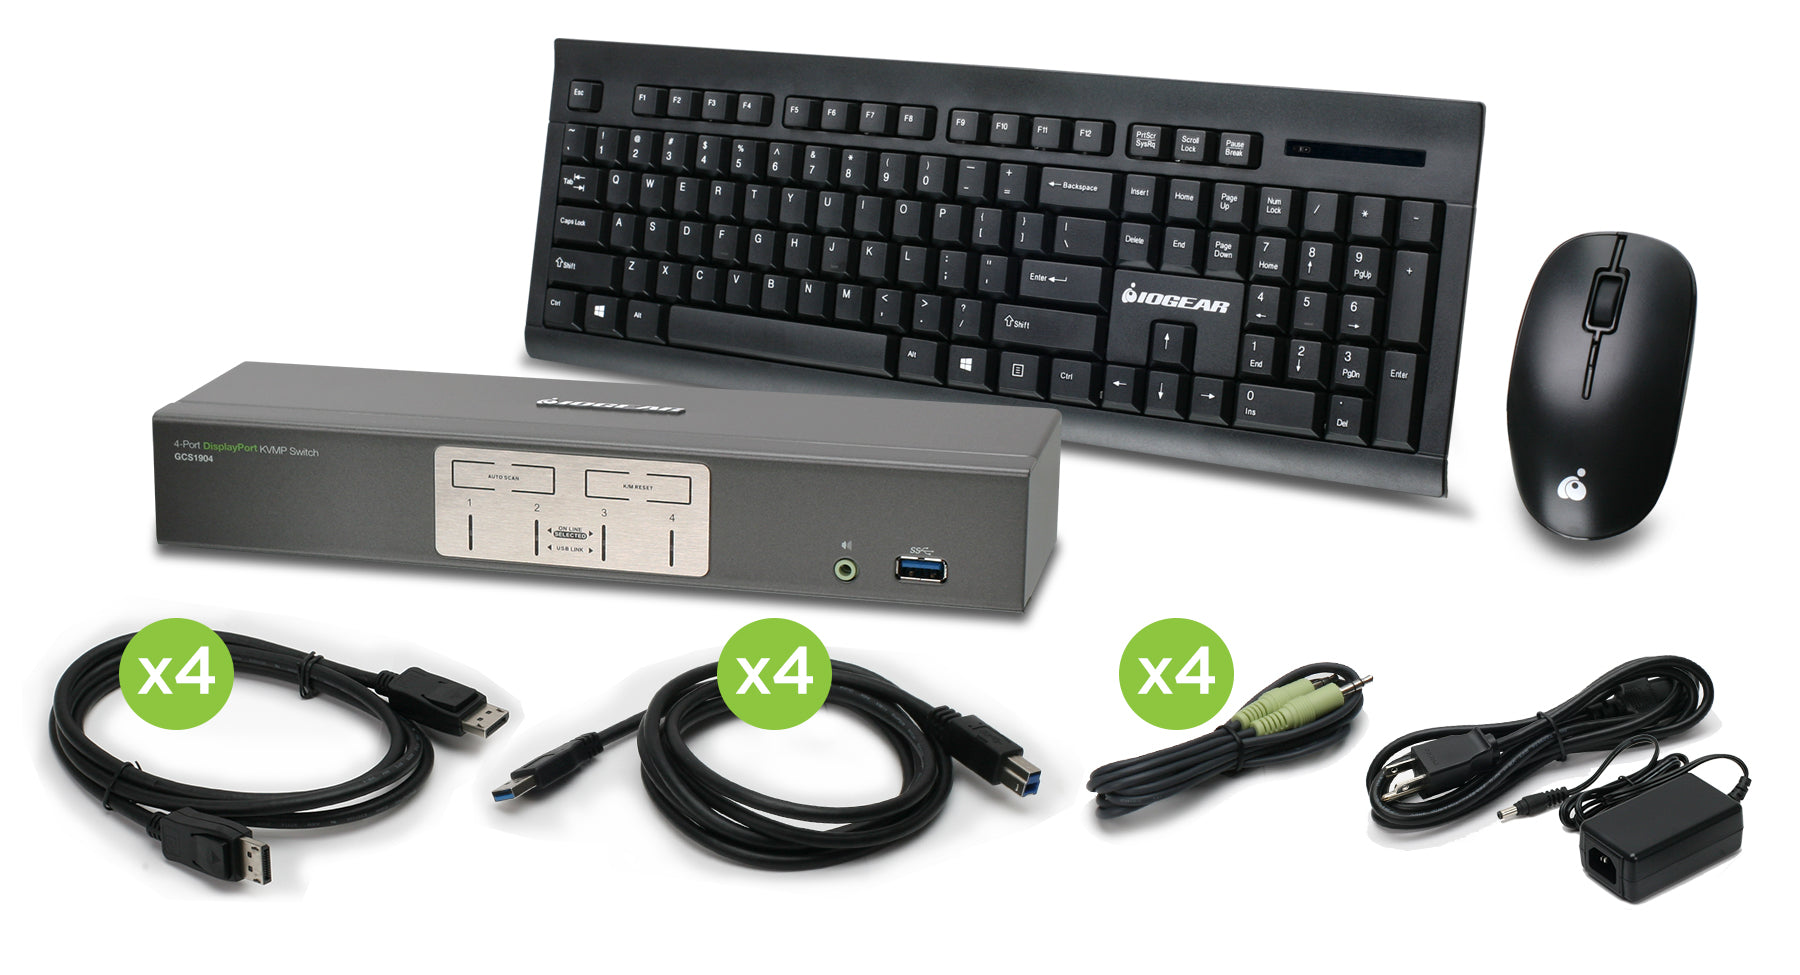 4-Port 4K UHD DisplayPort KVMP with Keyboard and Mouse (TAA)